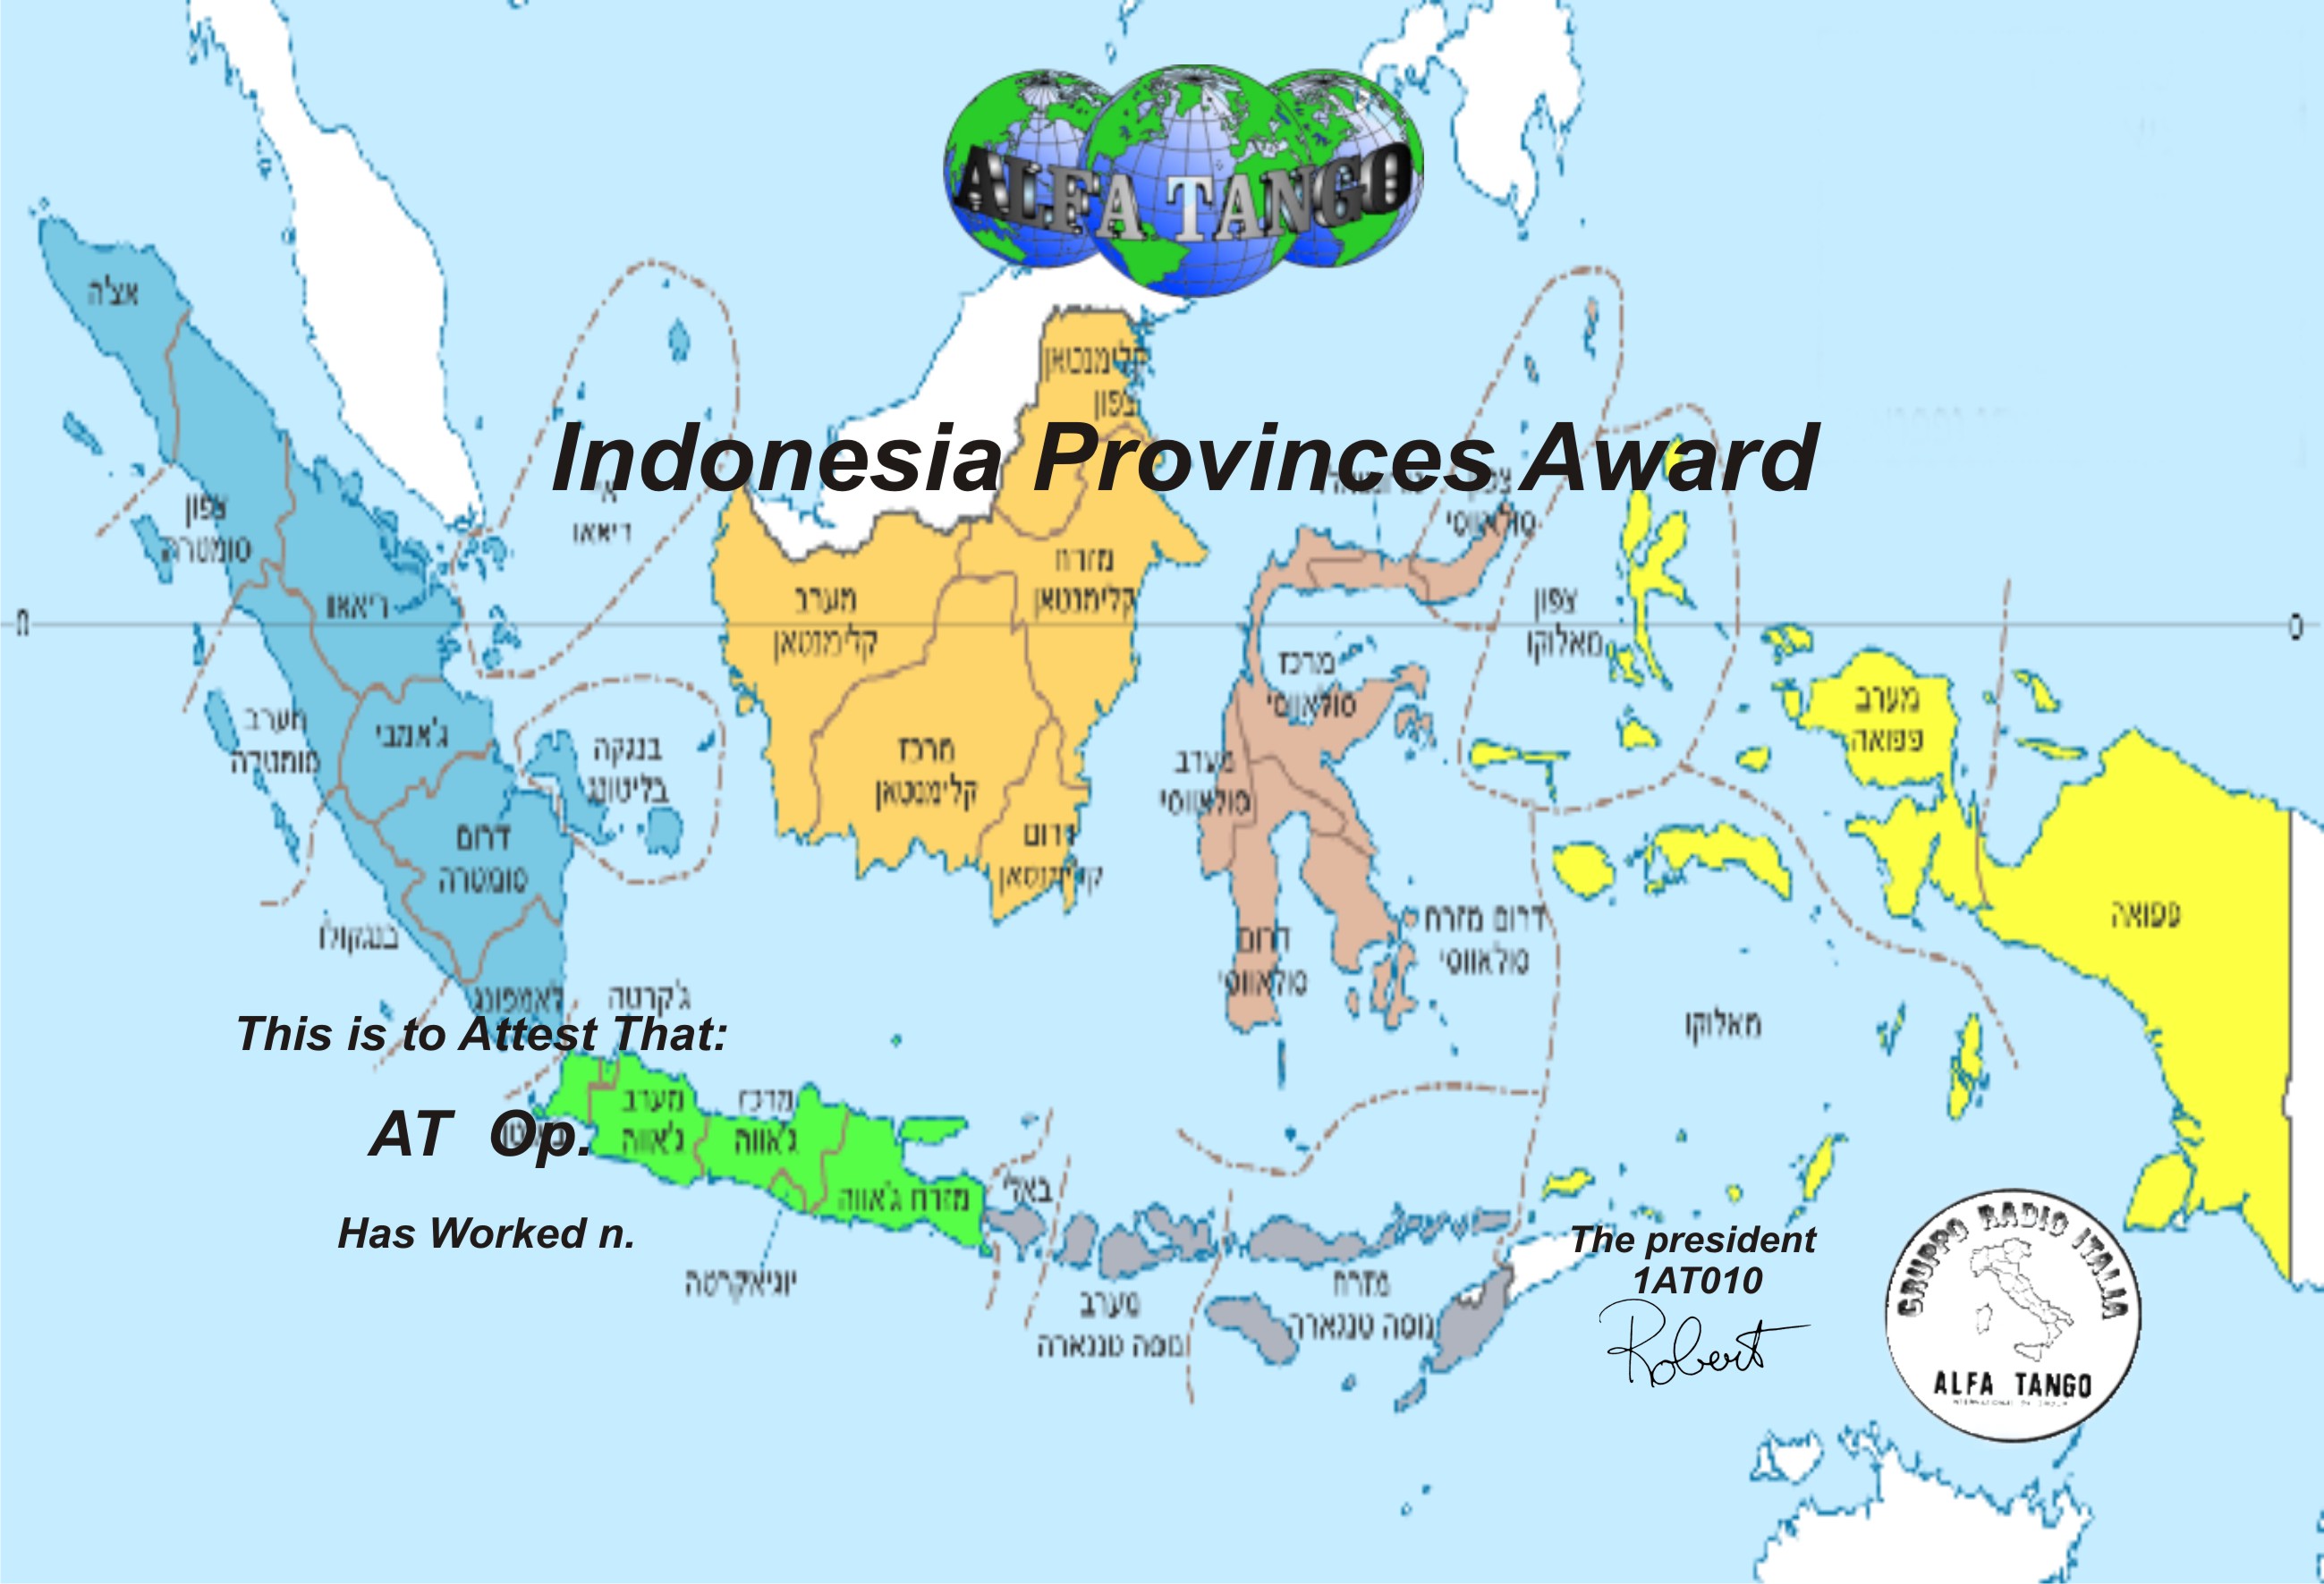 101_Indonesia_Provinces_Award.jpg